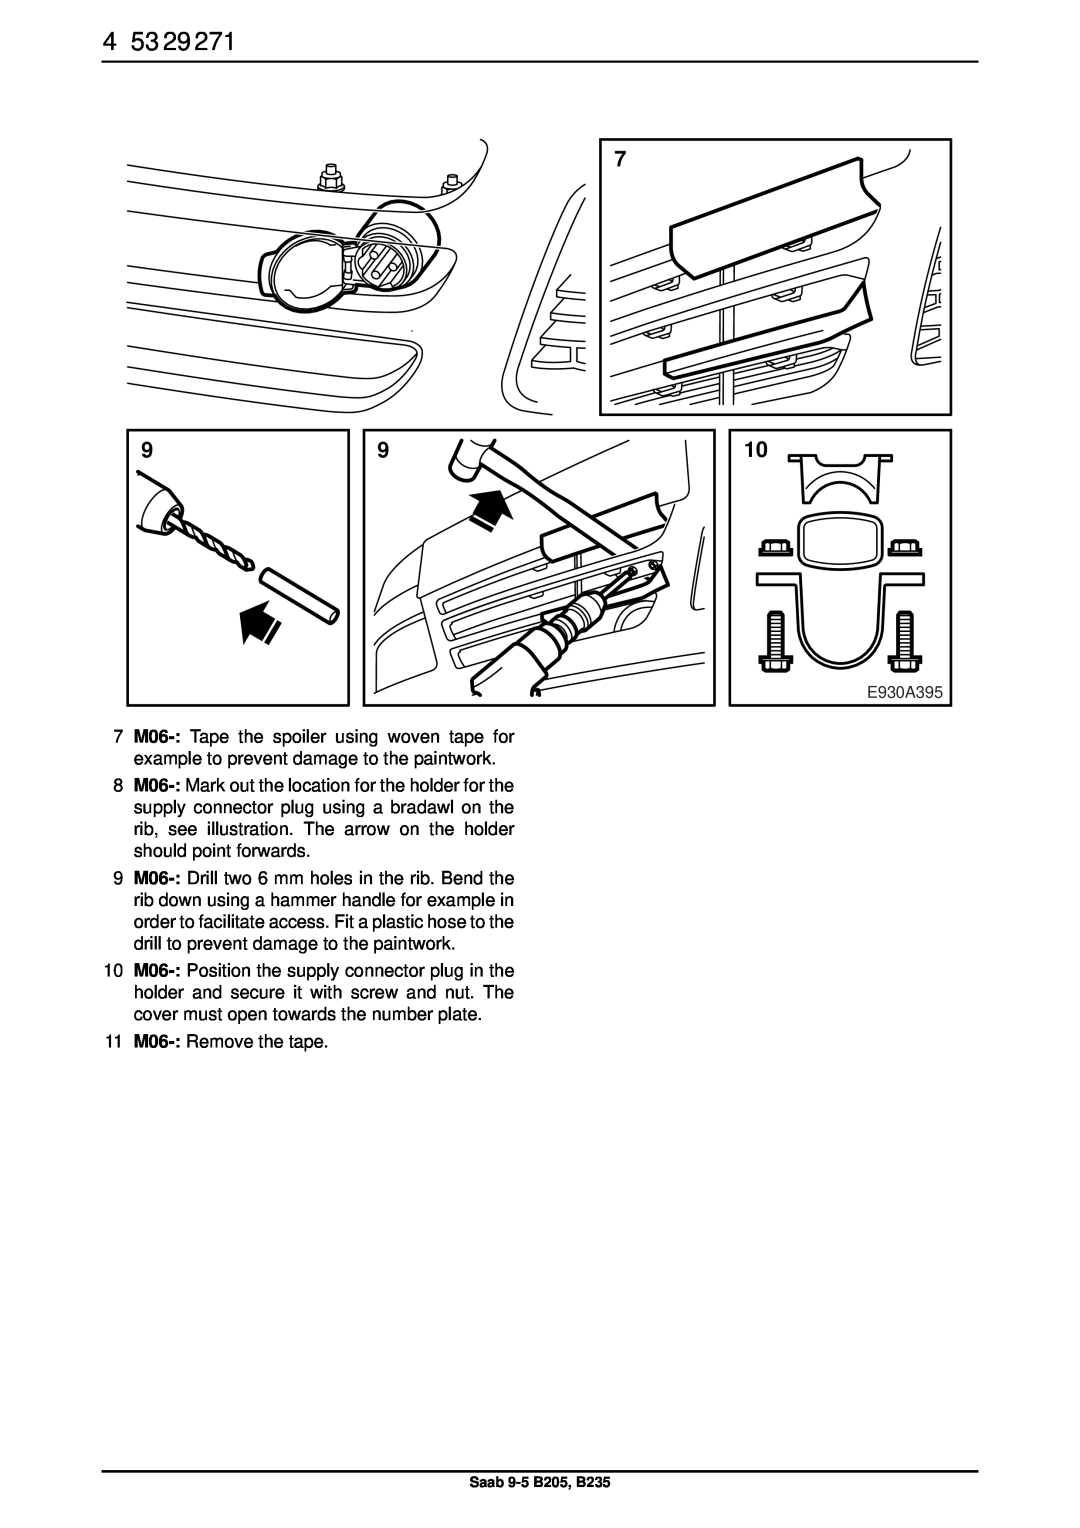 Saab B235, B205 installation instructions 11 M06- Remove the tape 